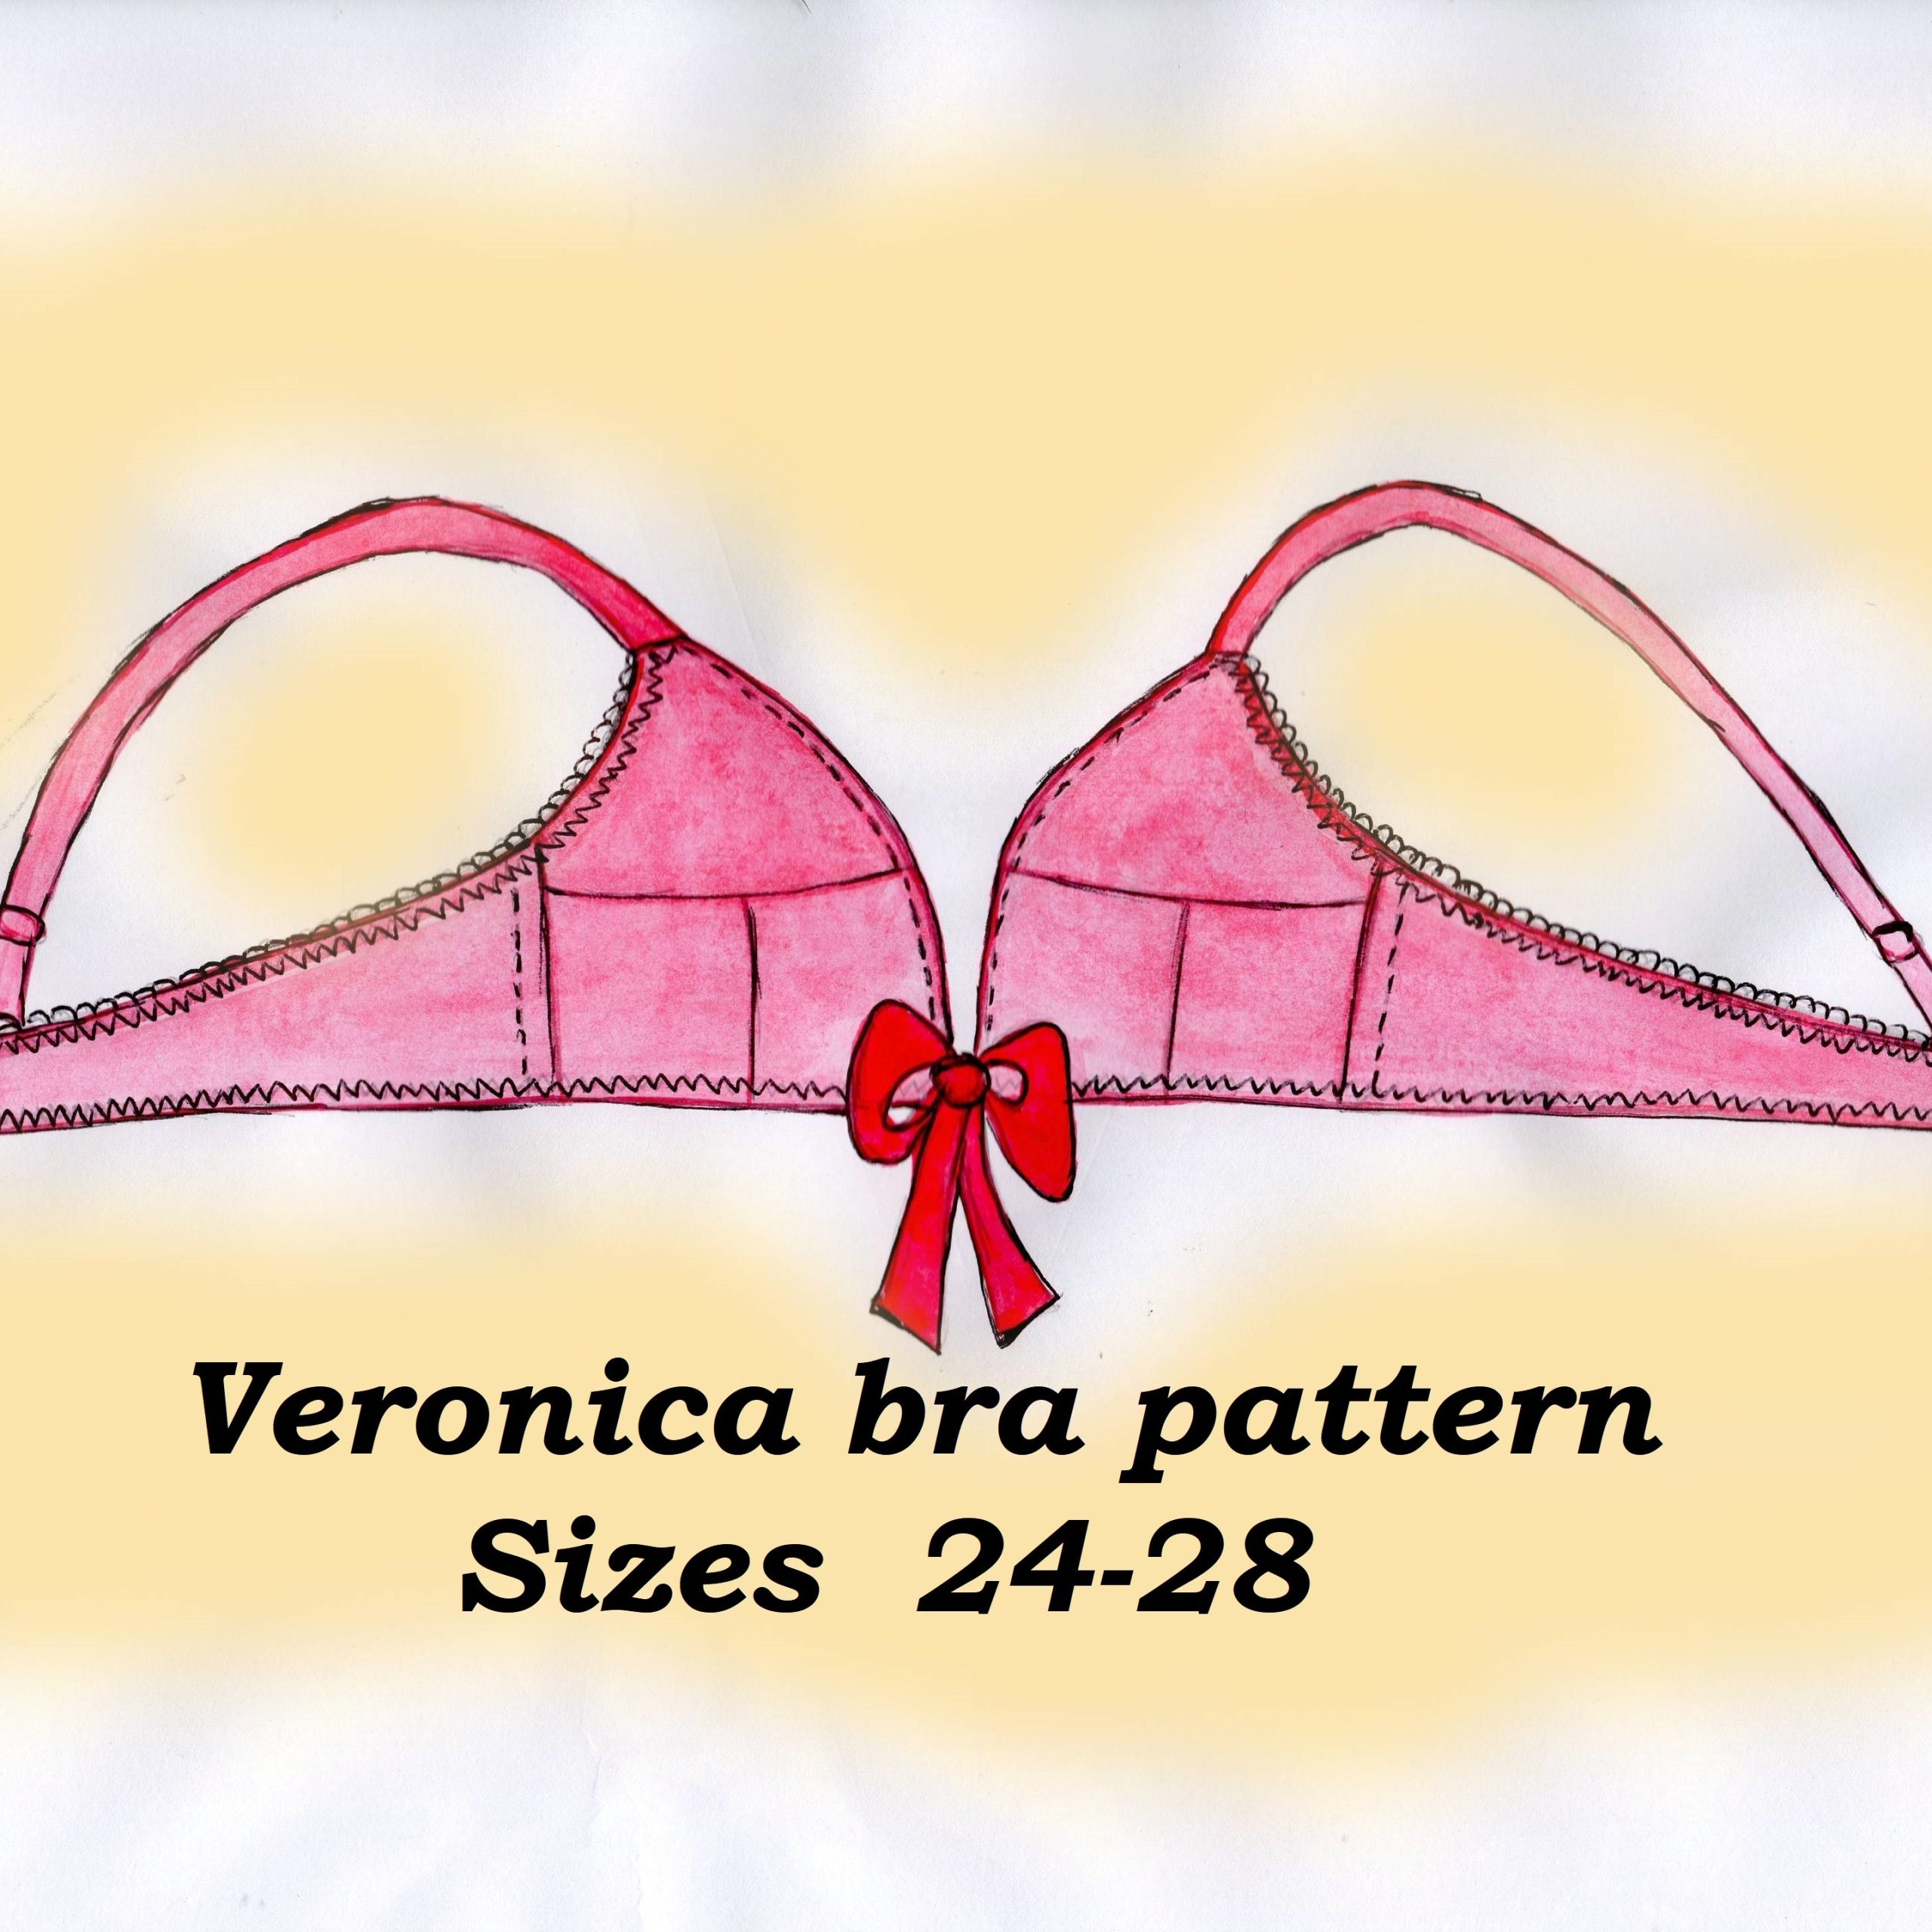 Nursing bra sewing pattern plus size, Nicole, Sizes 29-33